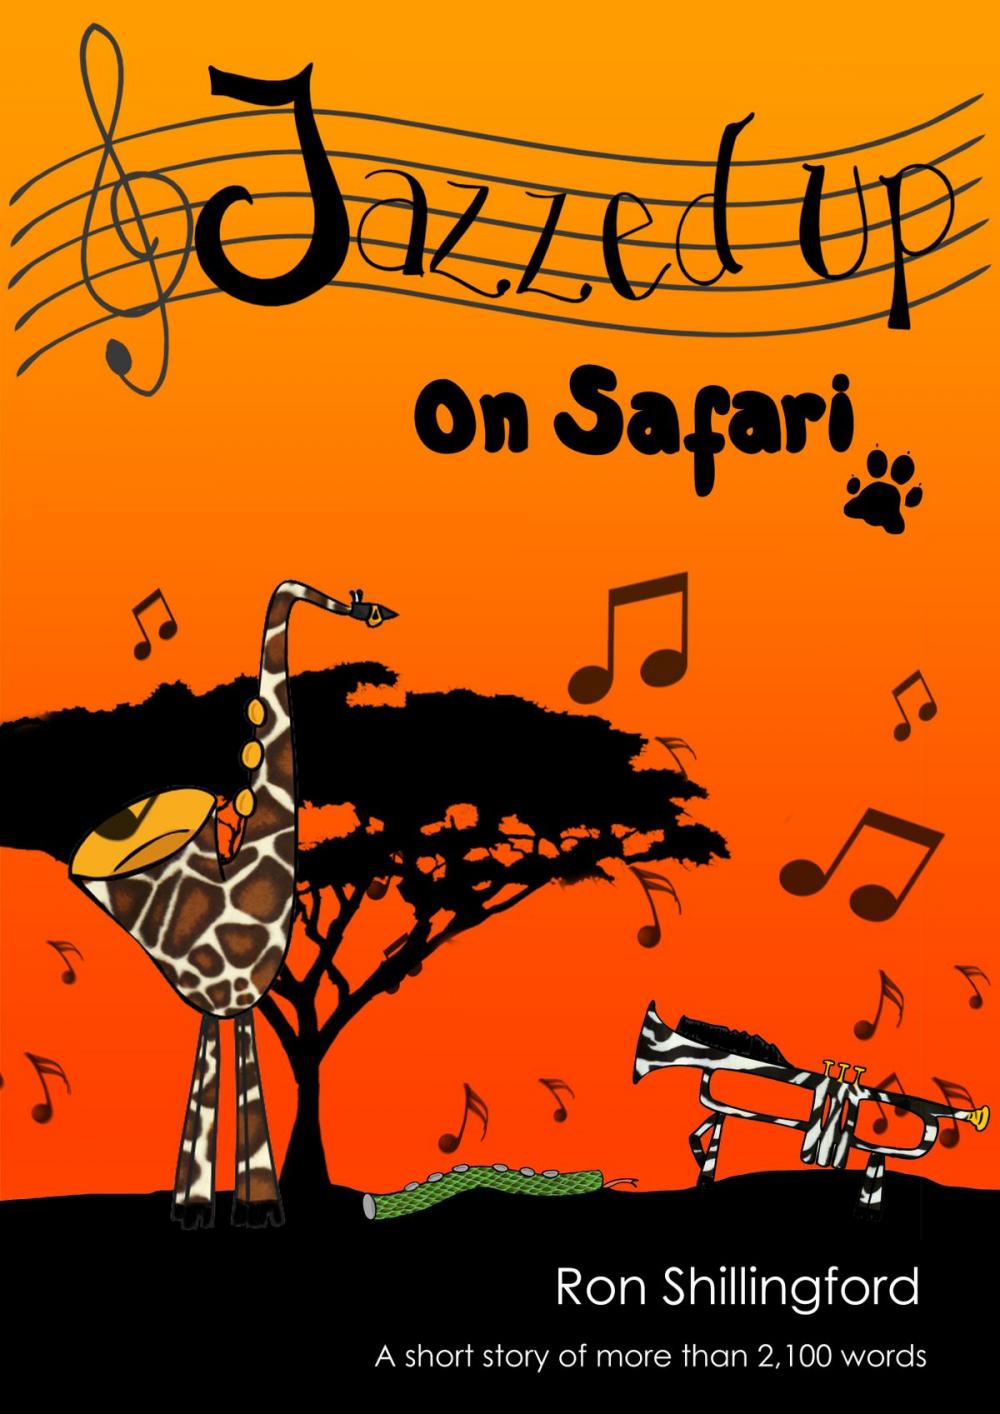 Big bigCover of Jazzed Up On Safari